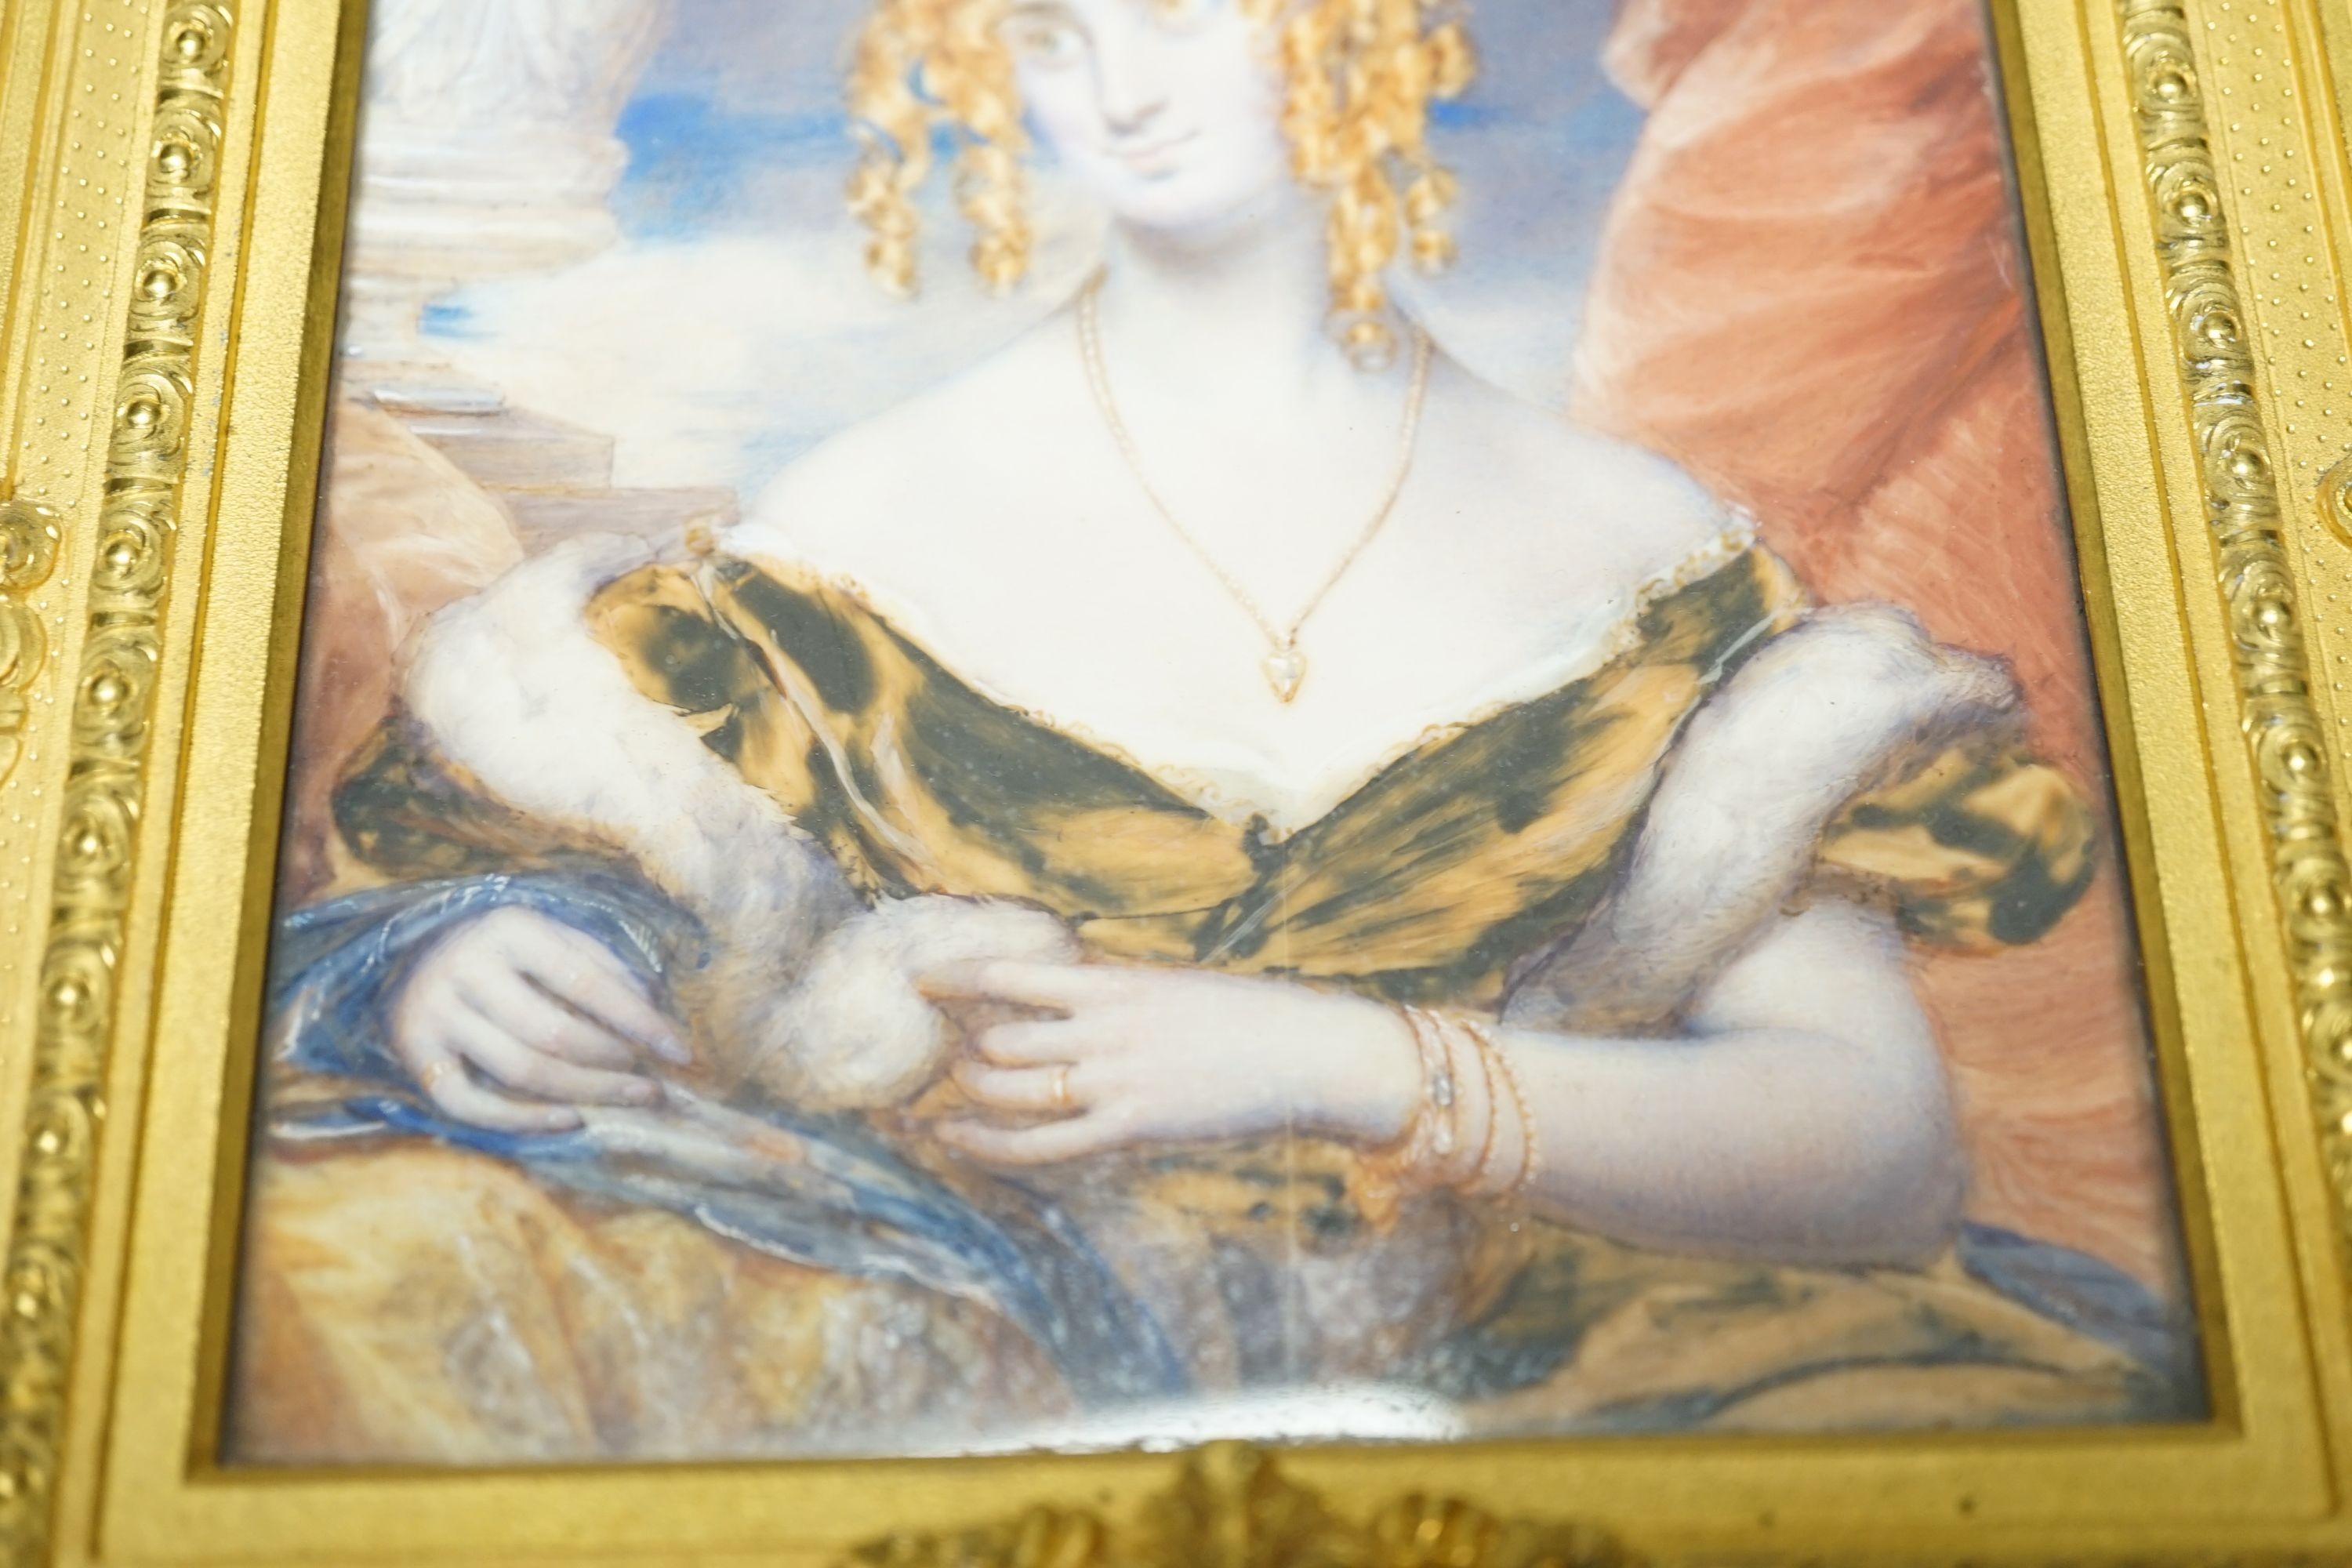 19th century ormolu framed portrait miniature on ivory of a young lady with auburn hair. Length of frame - 23cm